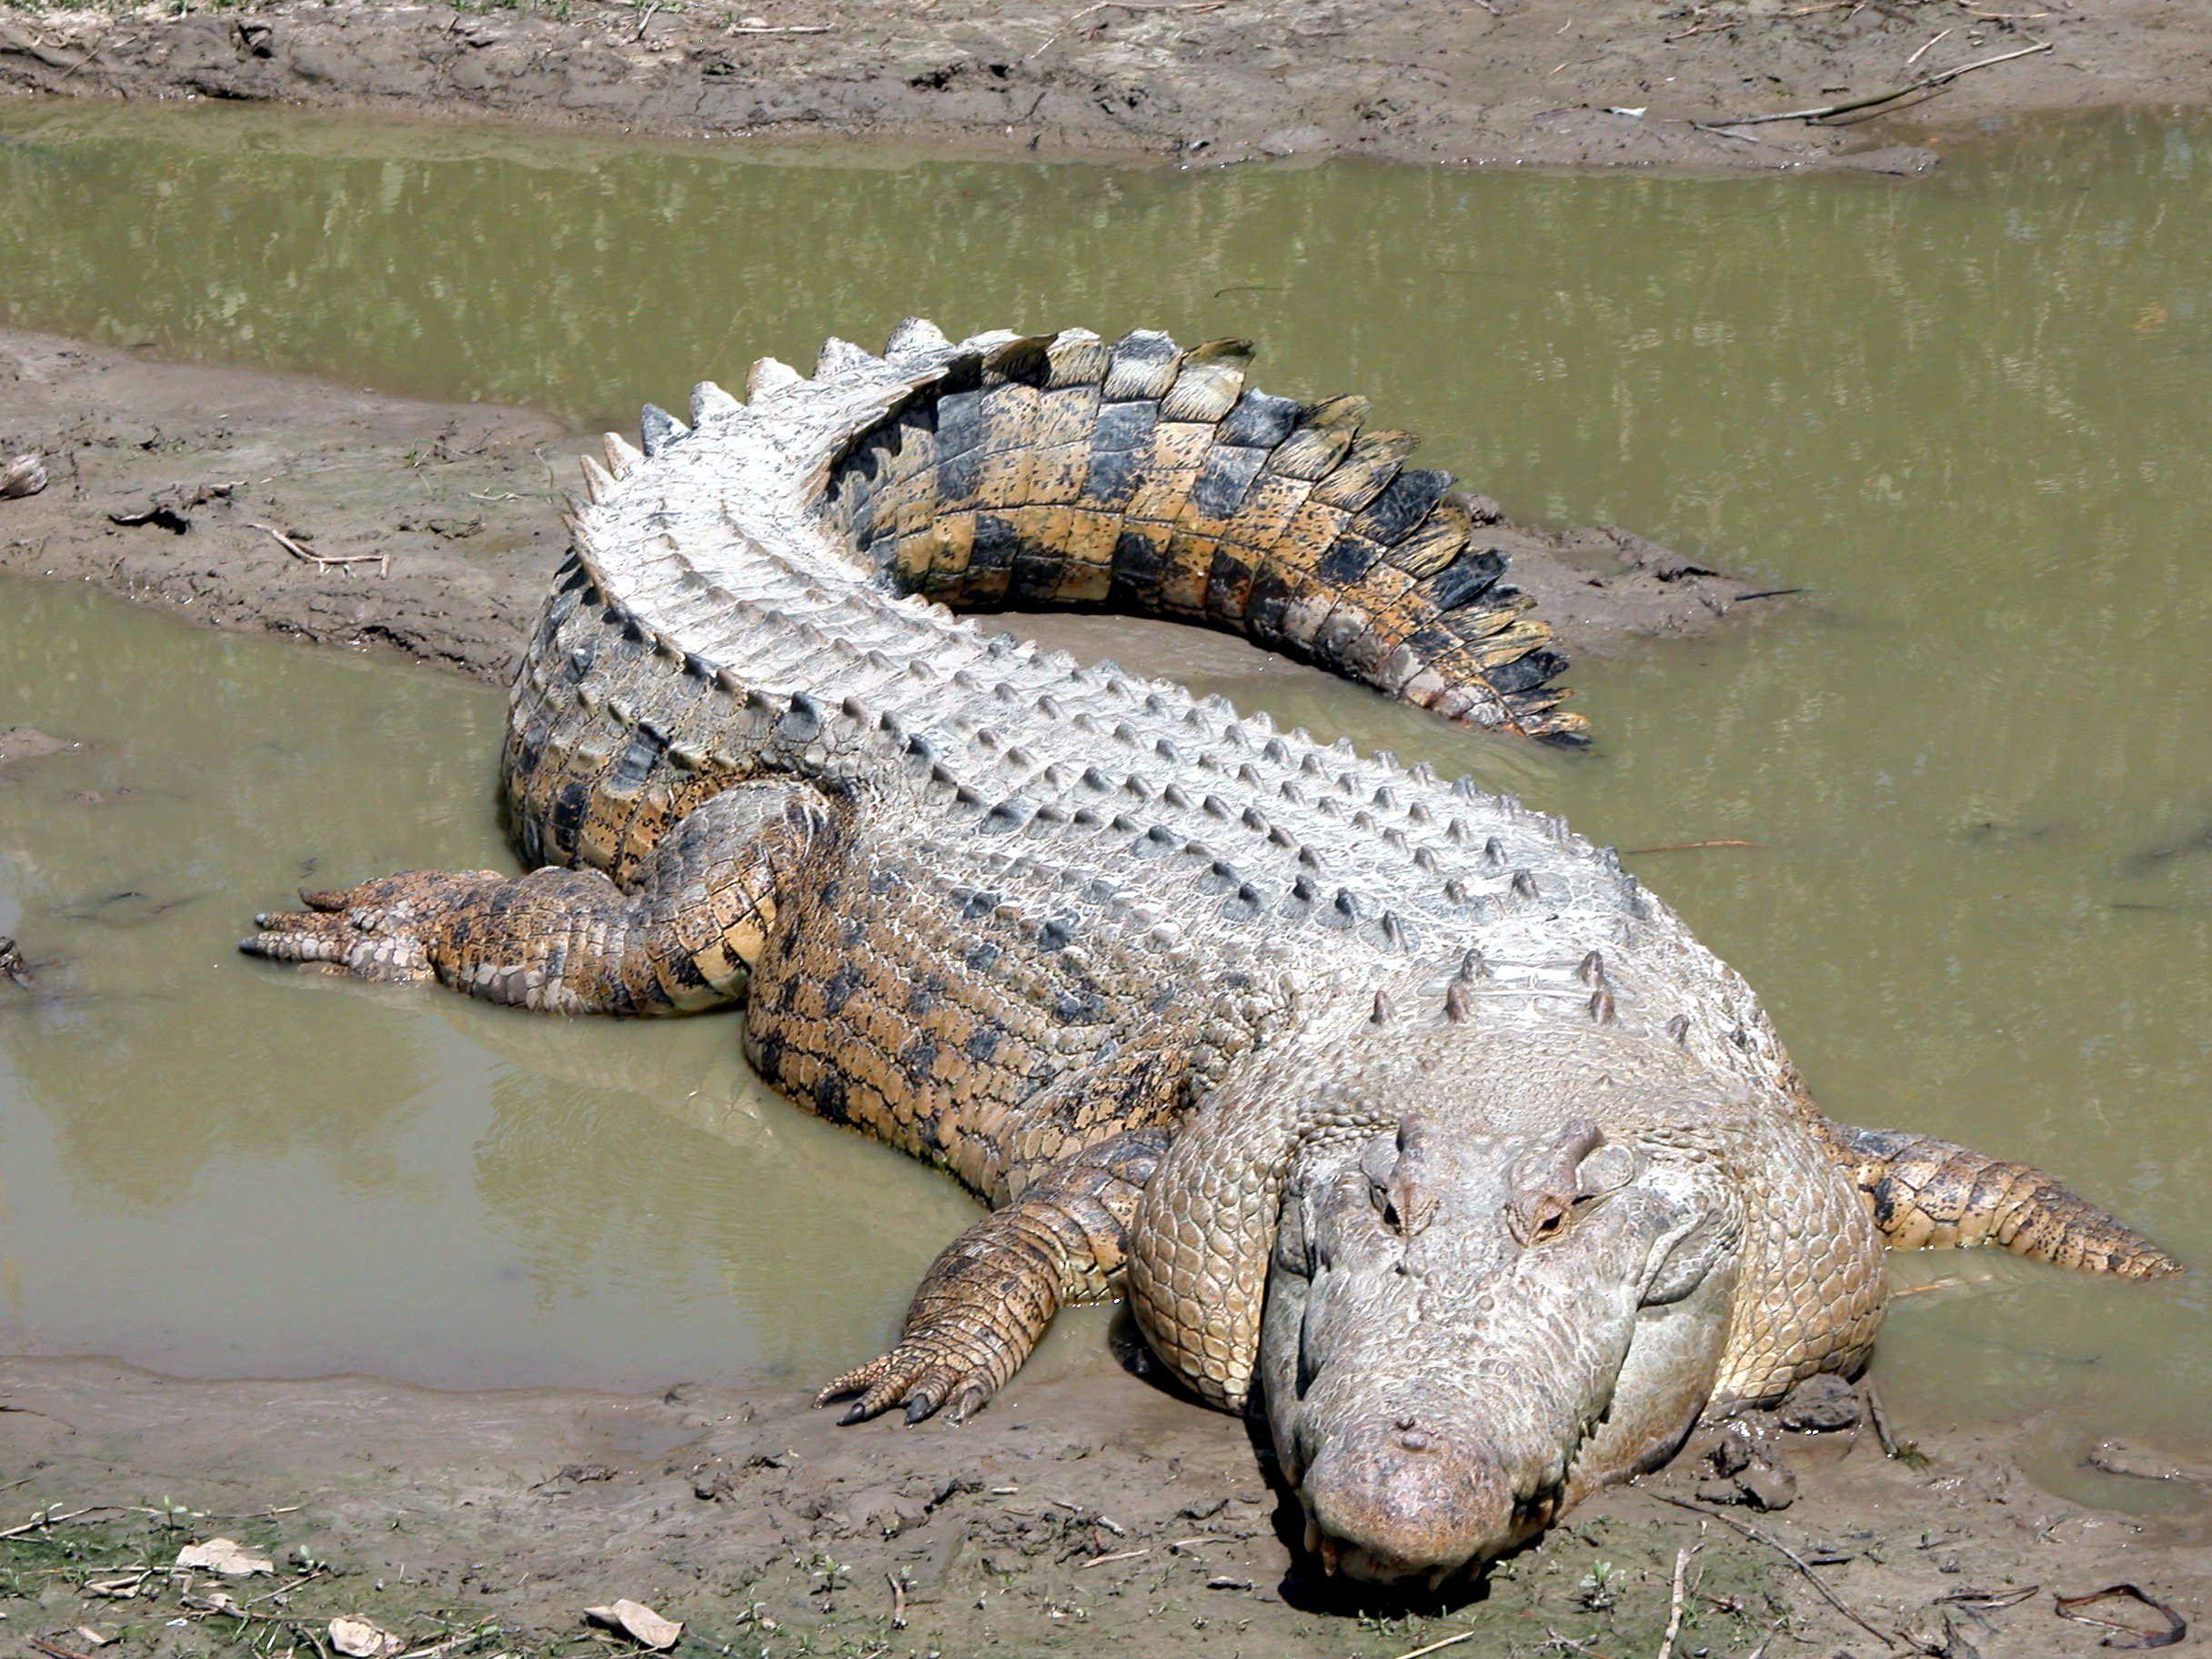 Alligators and crocodiles free image, public domain image